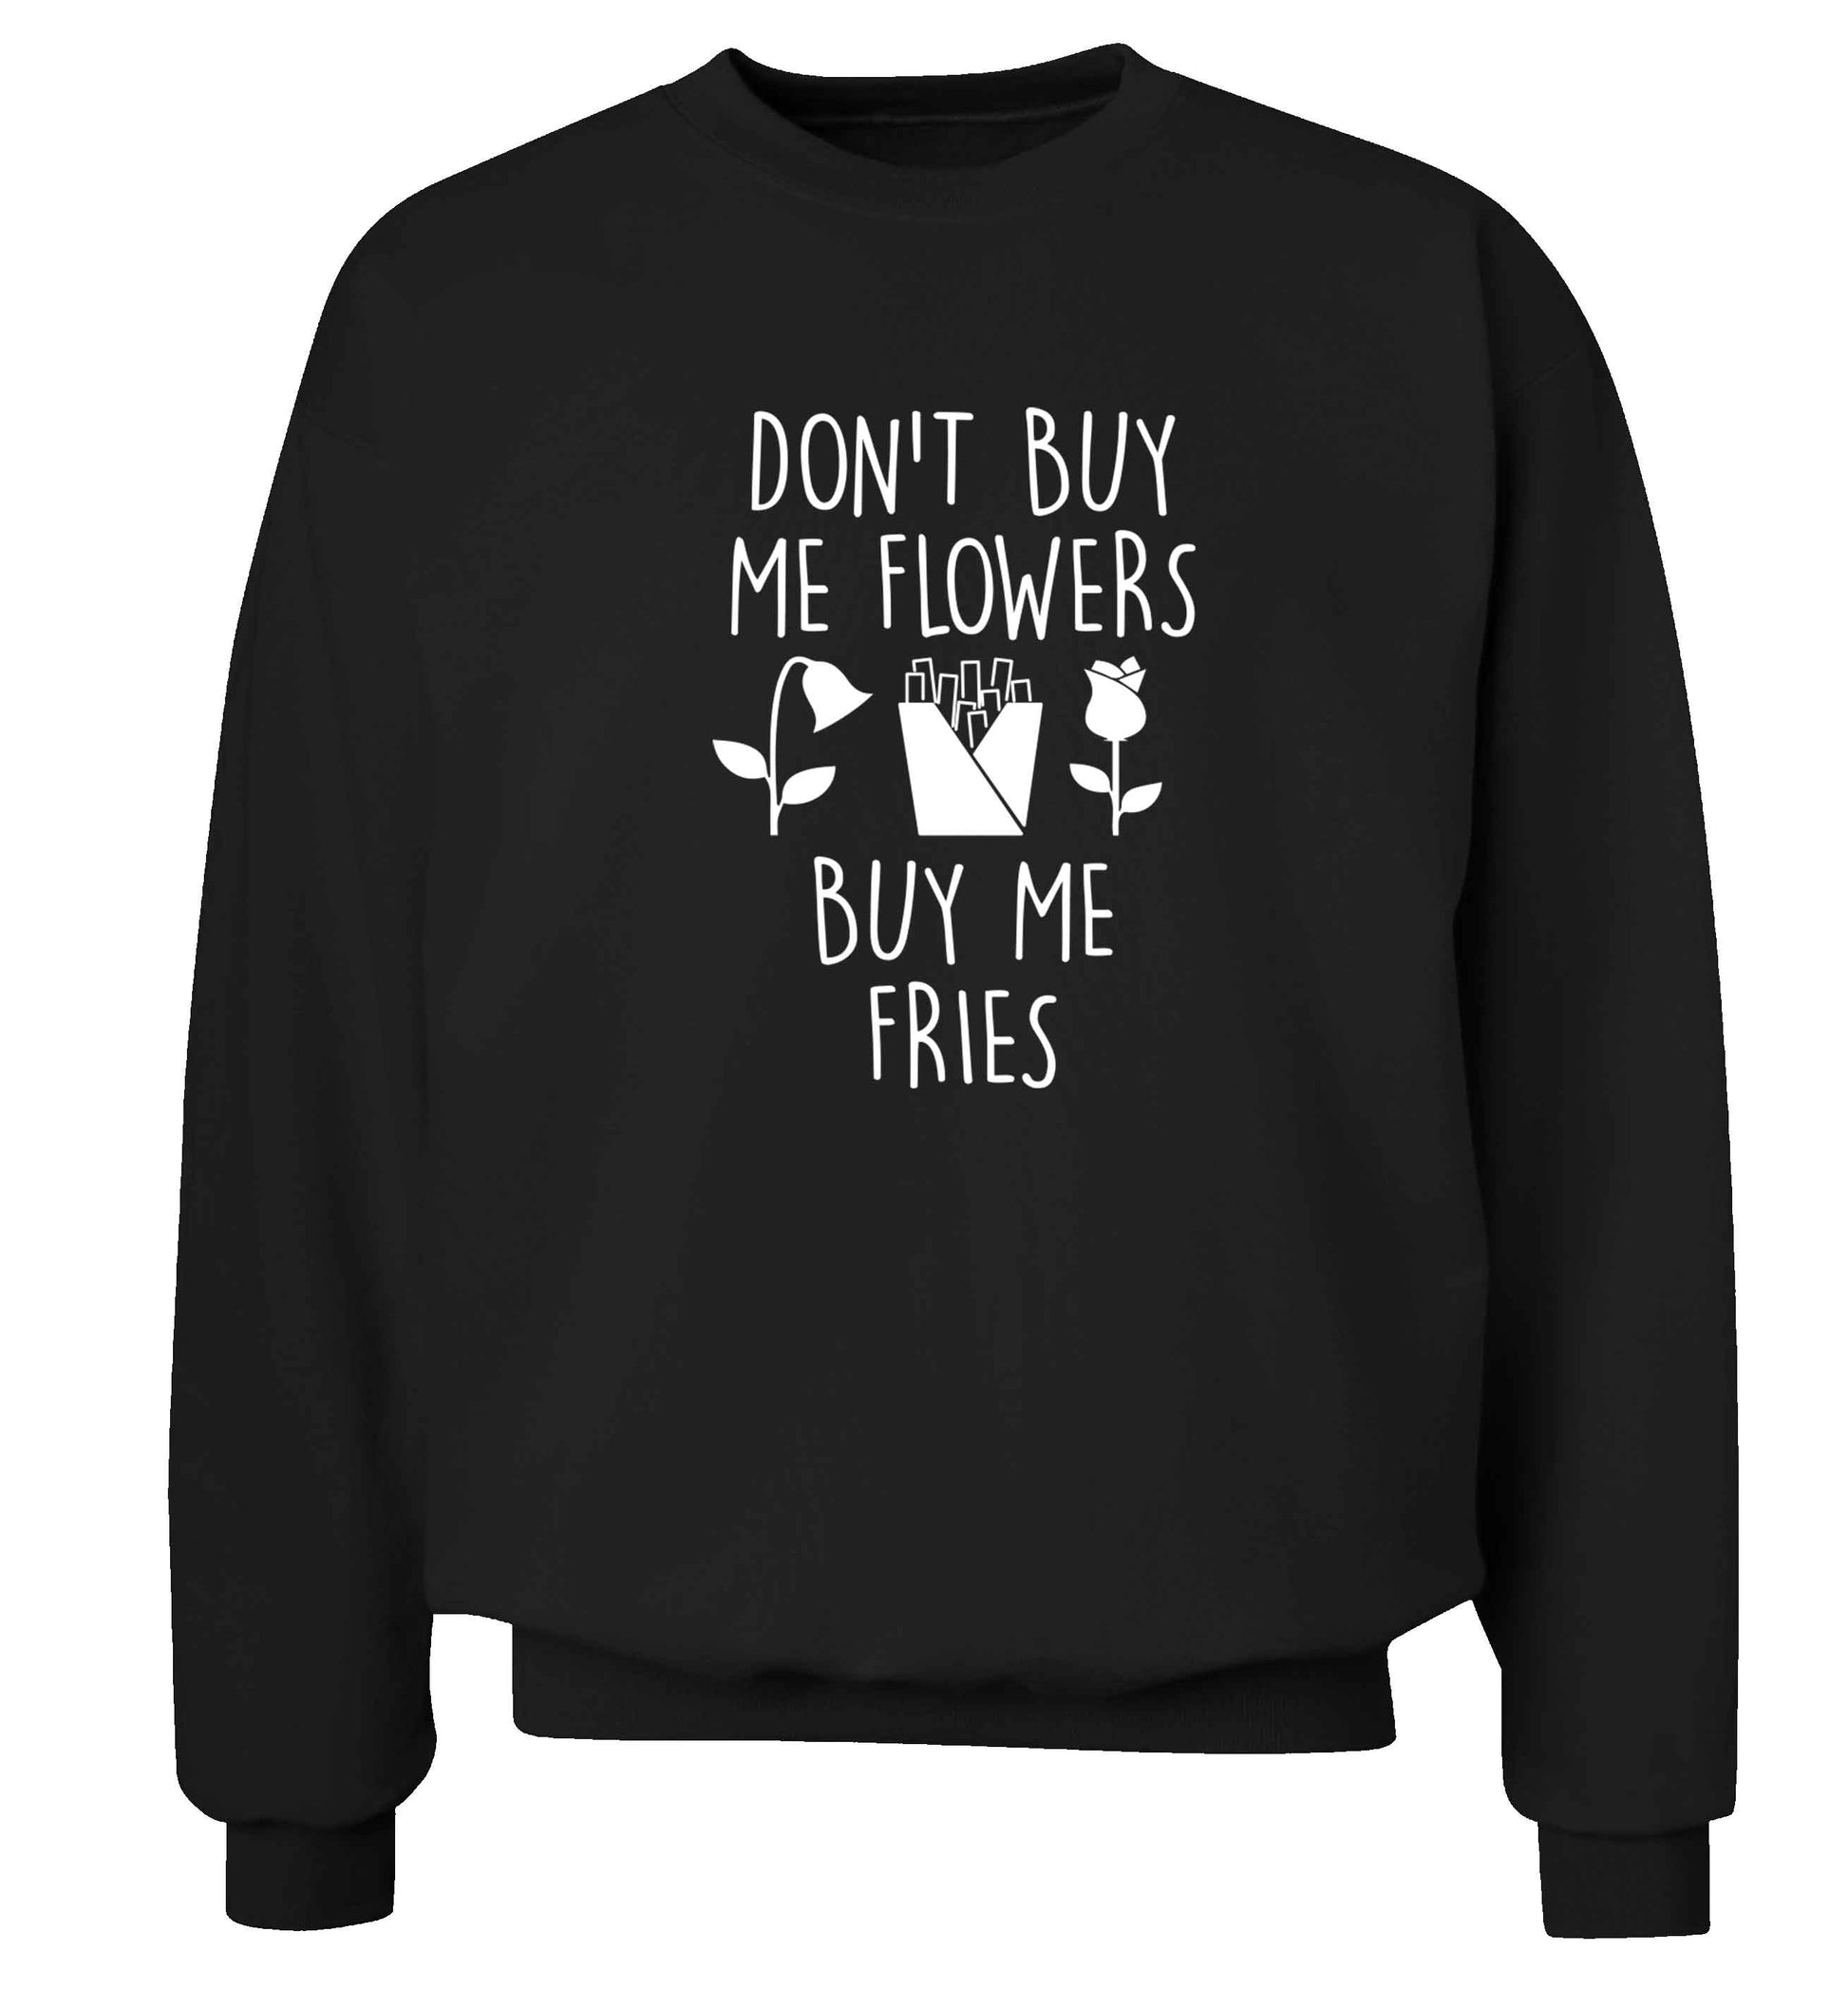 Don't buy me flowers buy me fries adult's unisex black sweater 2XL